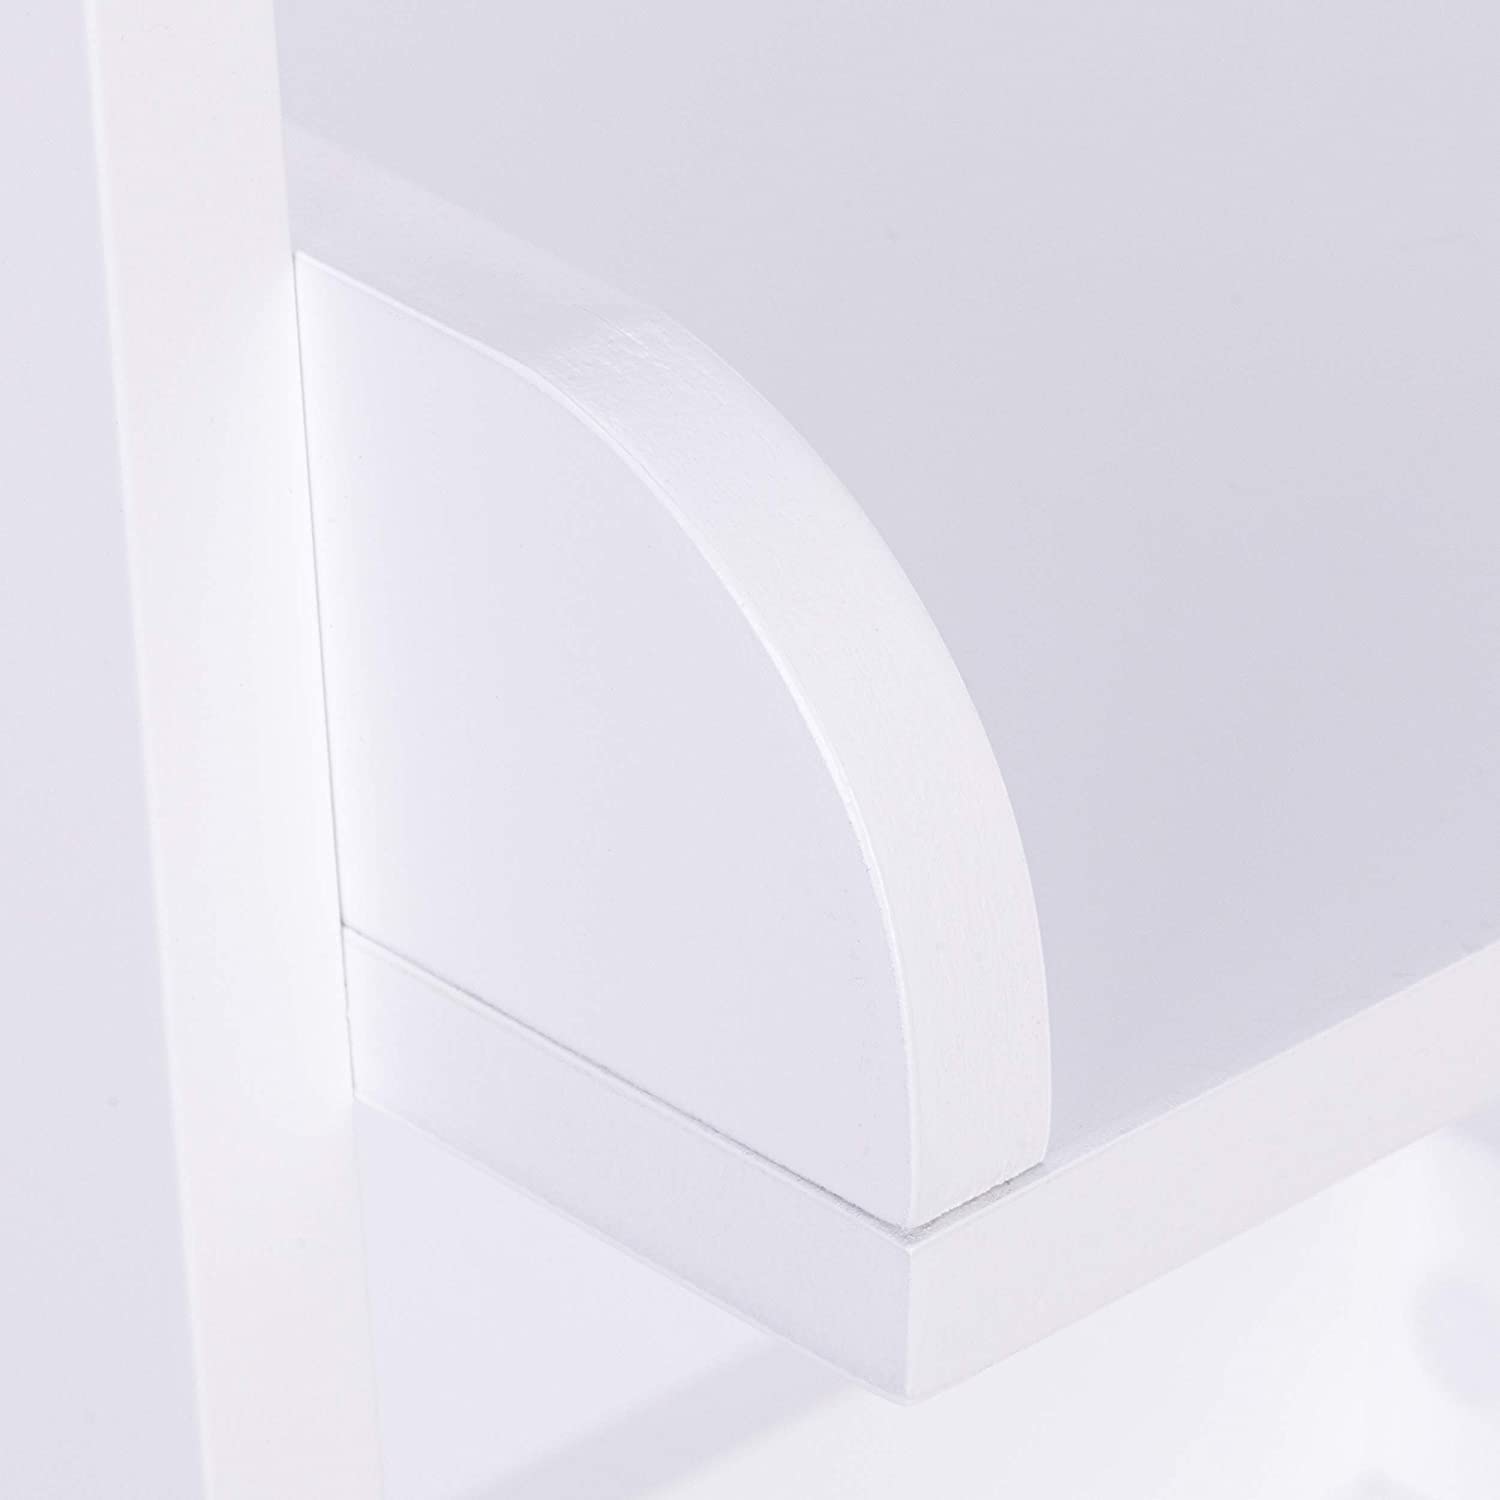 UTEX 3-Tier Ladder Shelf, Bathroom Shelf Freestanding, 3-Shelf Spacesaver  Open Wood Shelving Unit, Ladder Shelf (White)